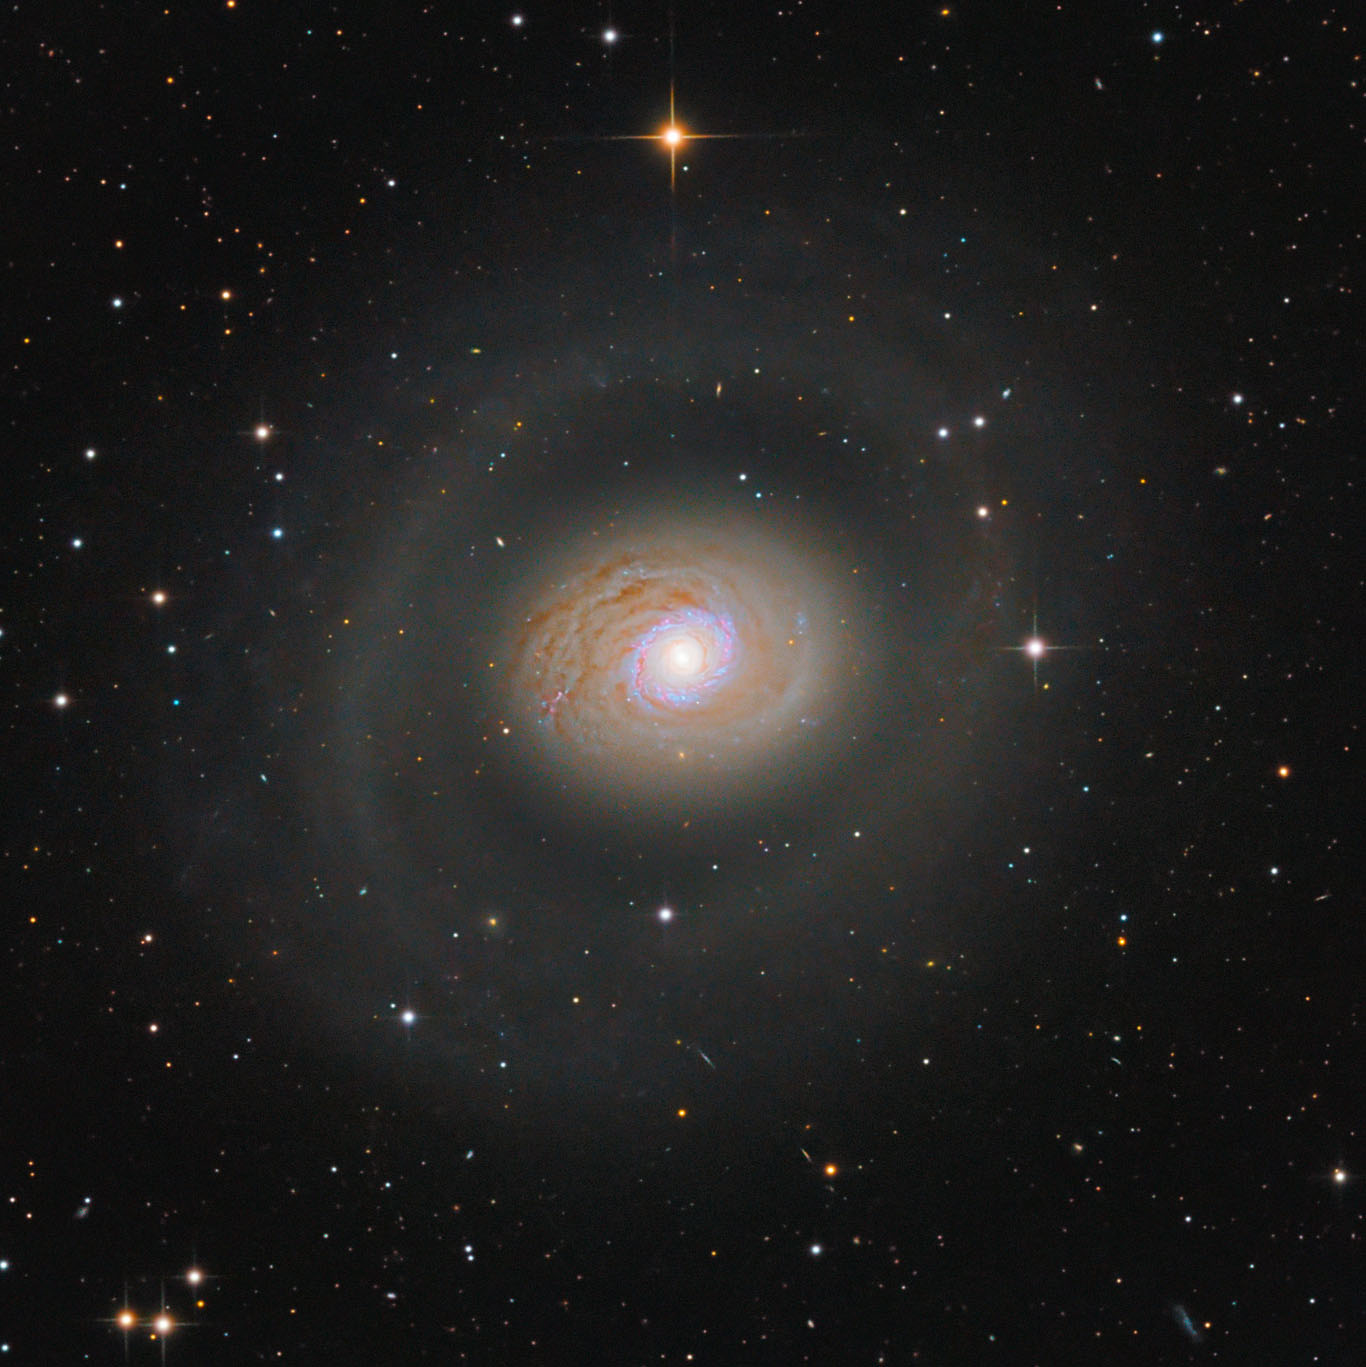 Messier 94 - The Croc's Eye Galaxy